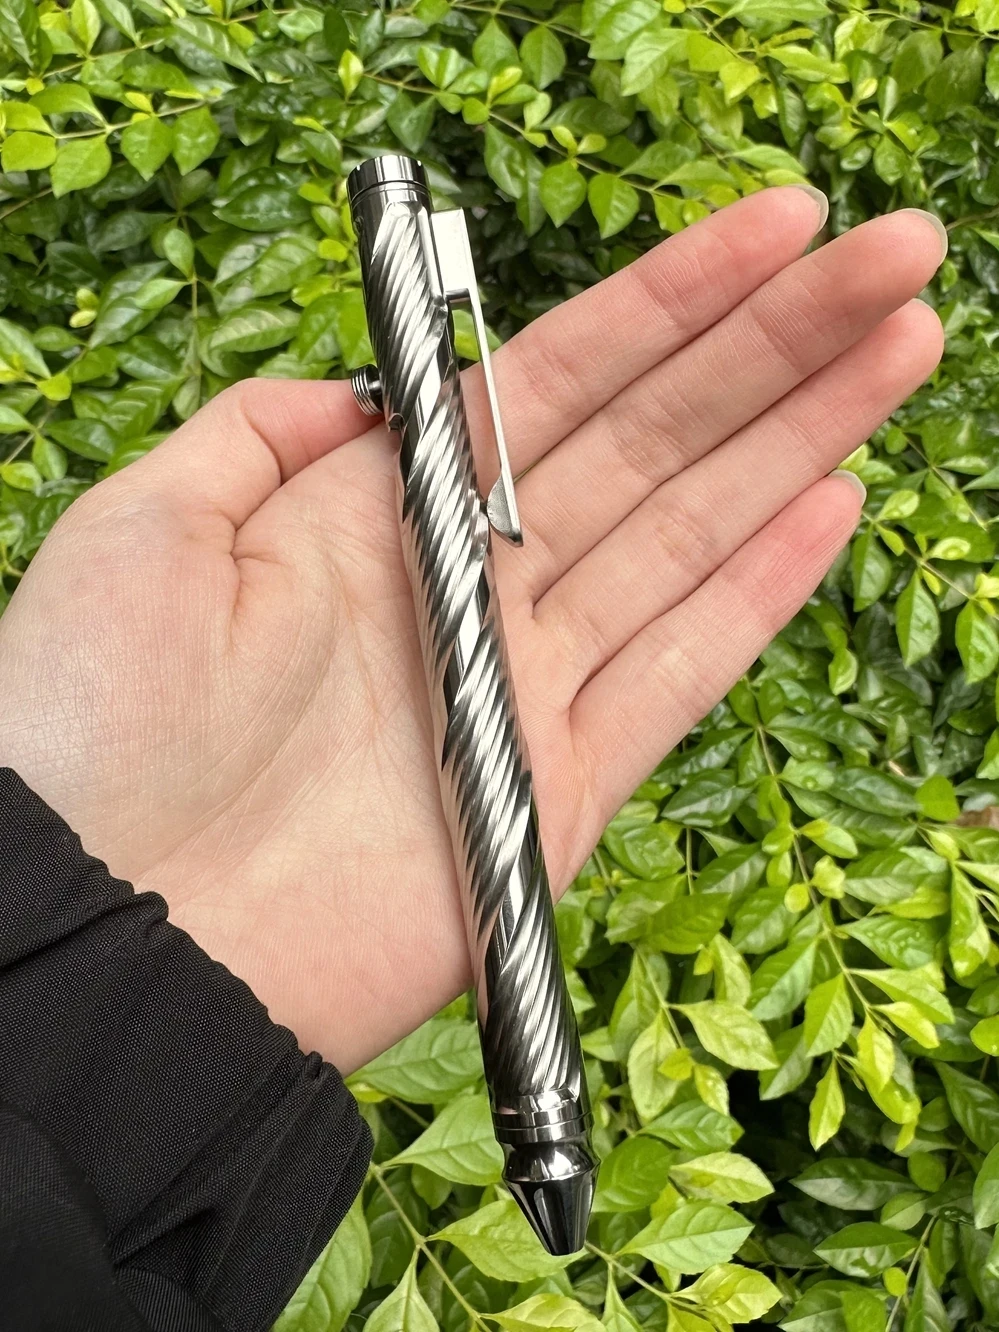 Edc Titanium Legering Zirkonium Legering Pen Met Collectie Schrijven Multi-Functionele Draagbare Outdoor Edc Tools